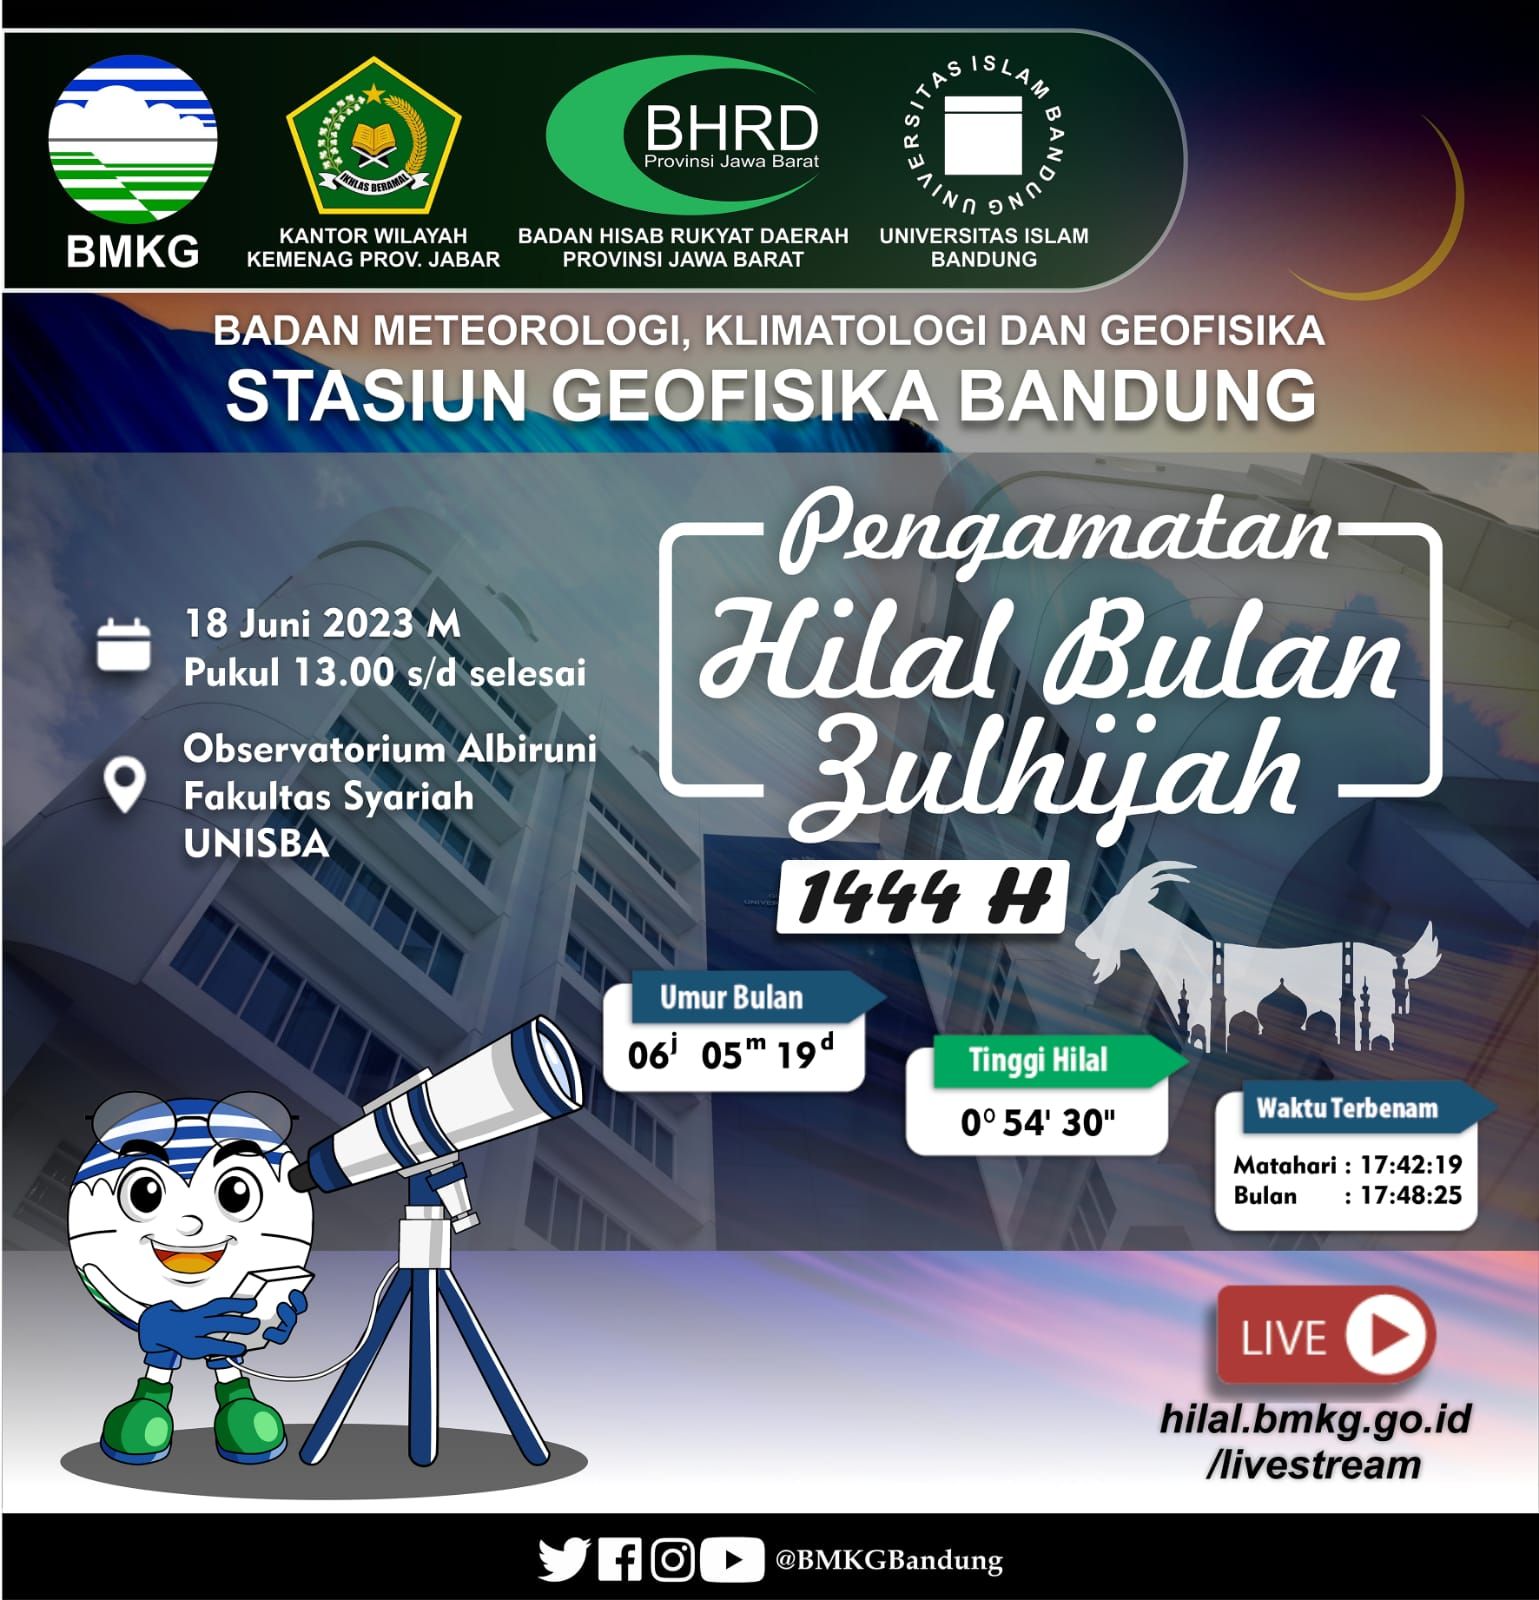 BMKG Bandung akan lakukan pengamatan rukyat hilal pada hari ini mulai pukul 13.00 sampai selesai bertepatan di Observatorium Albiruni Fakultas Syariah Universitas Islam Bandung 